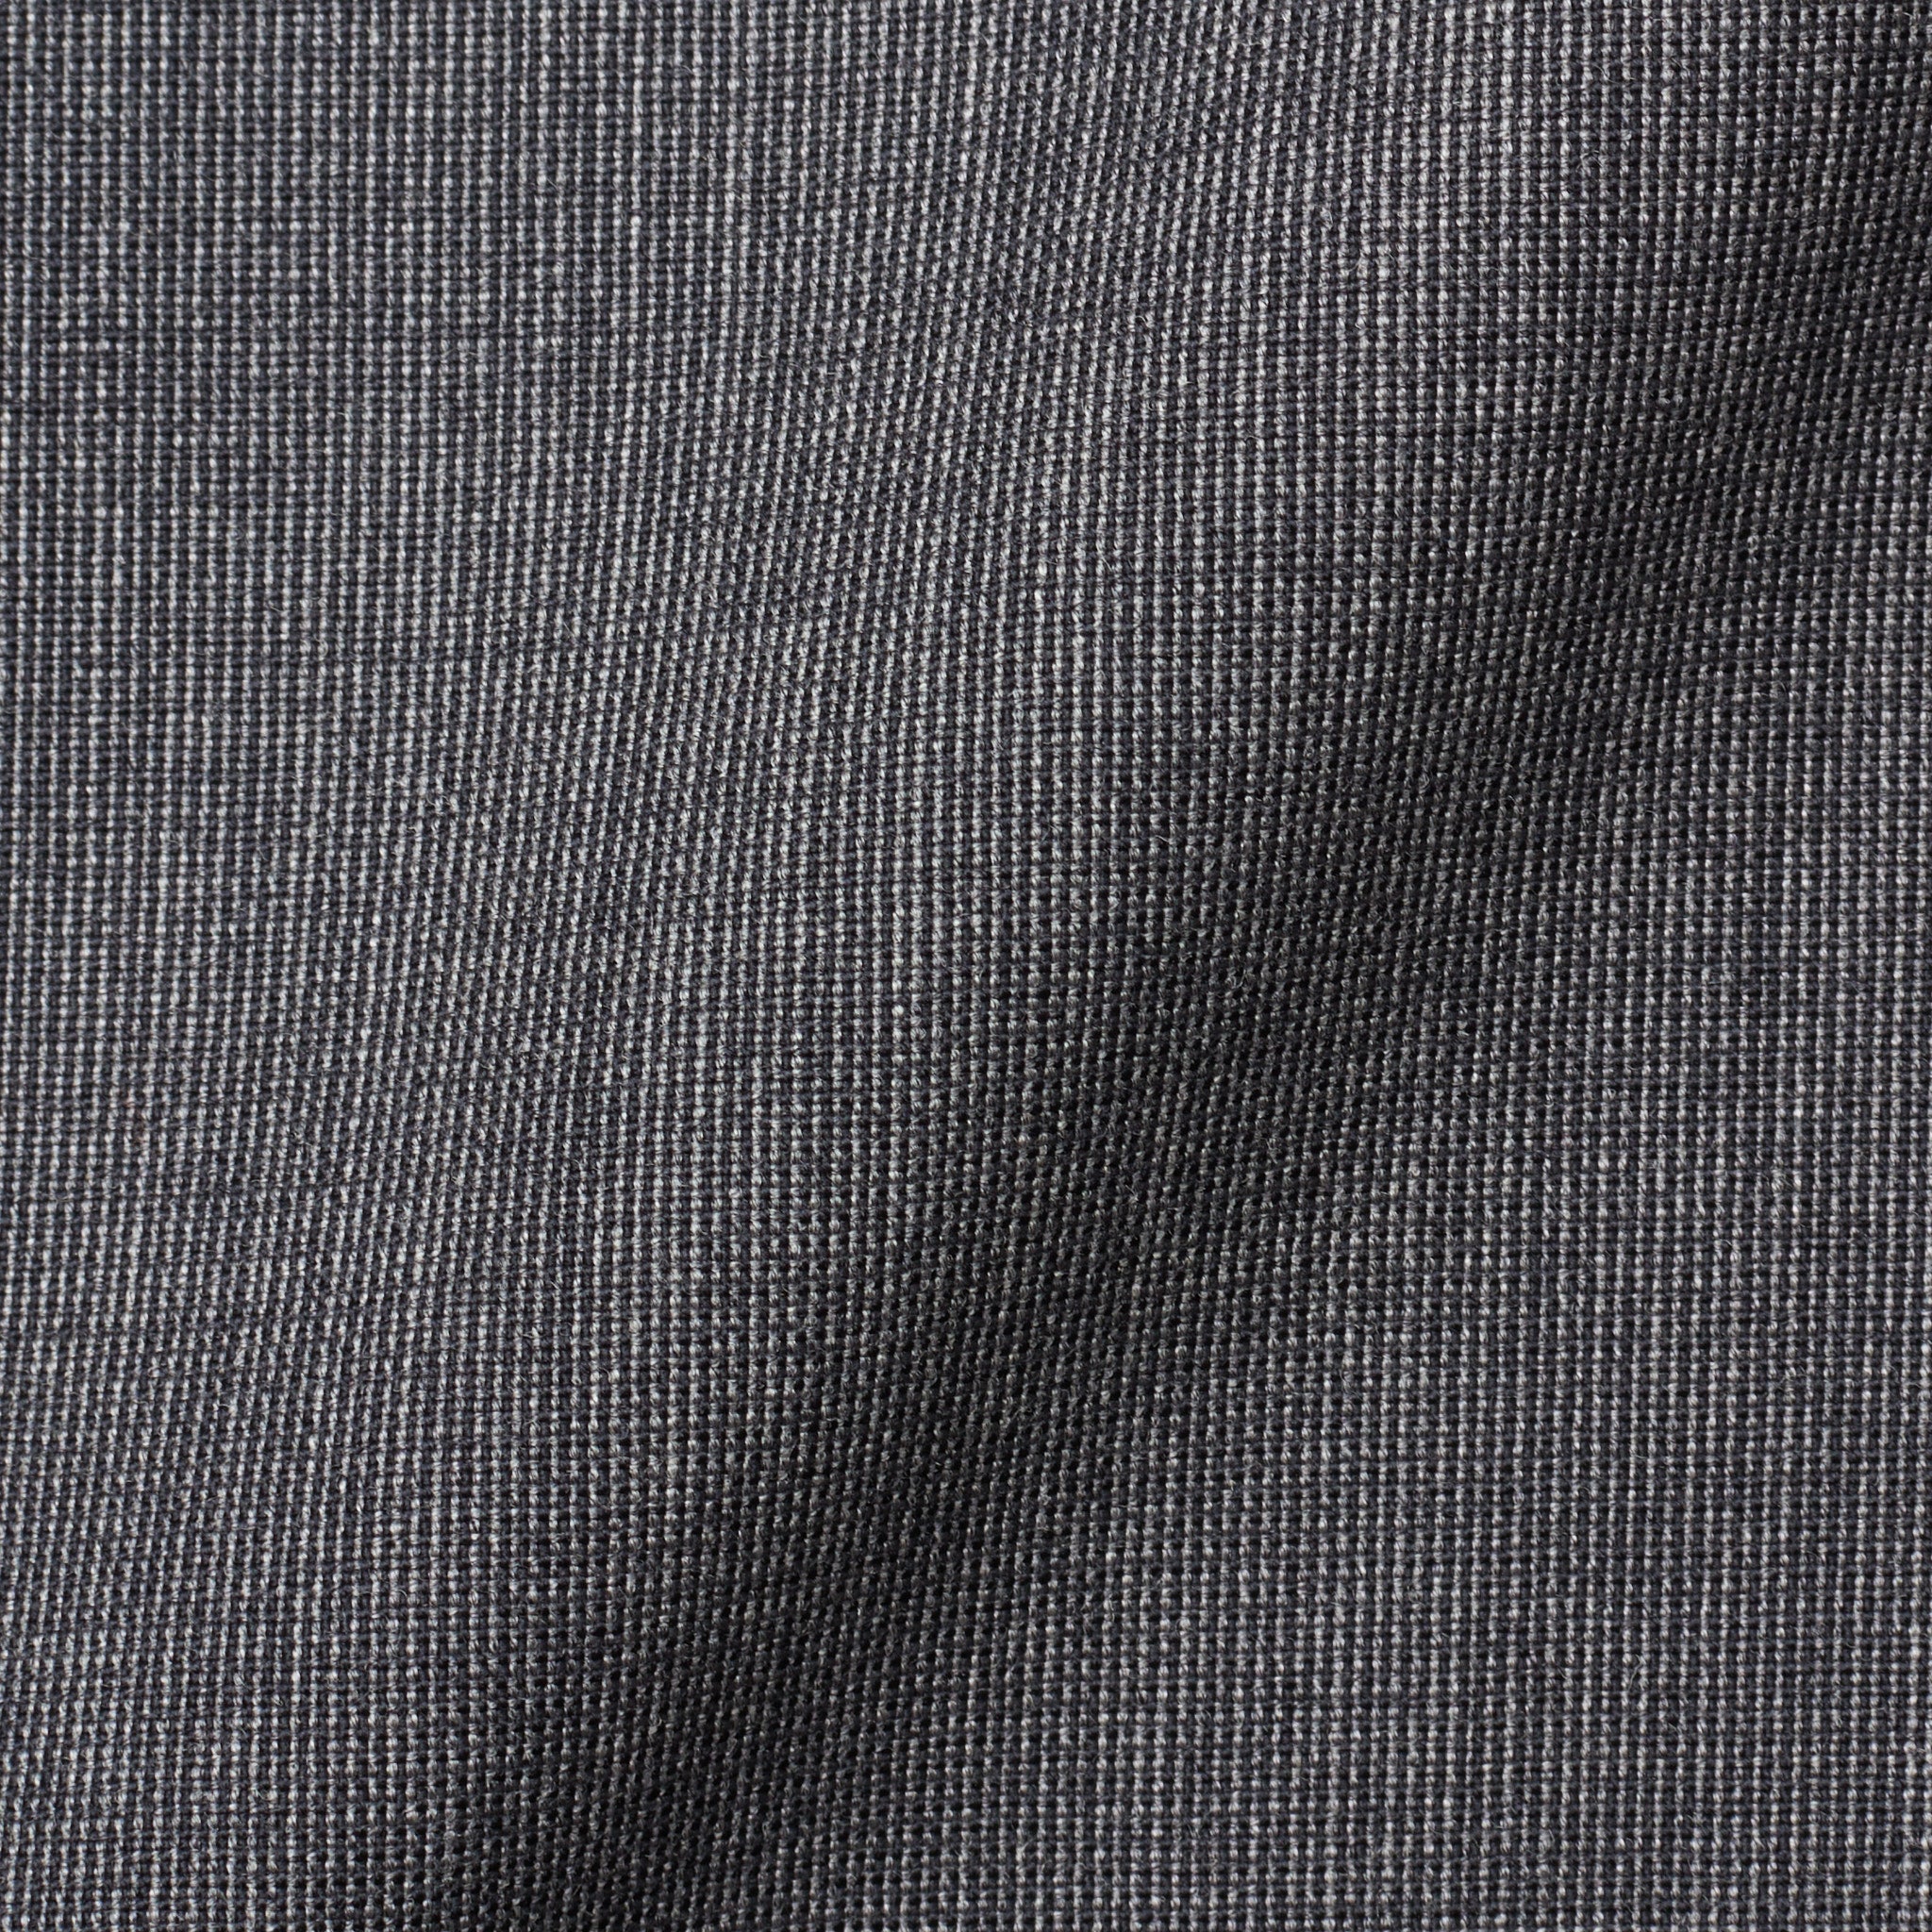 RUBINACCI LH Hand Made Bespoke Gray Wool Blazer Jacket EU 52 NEW US 40 42 RUBINACCI